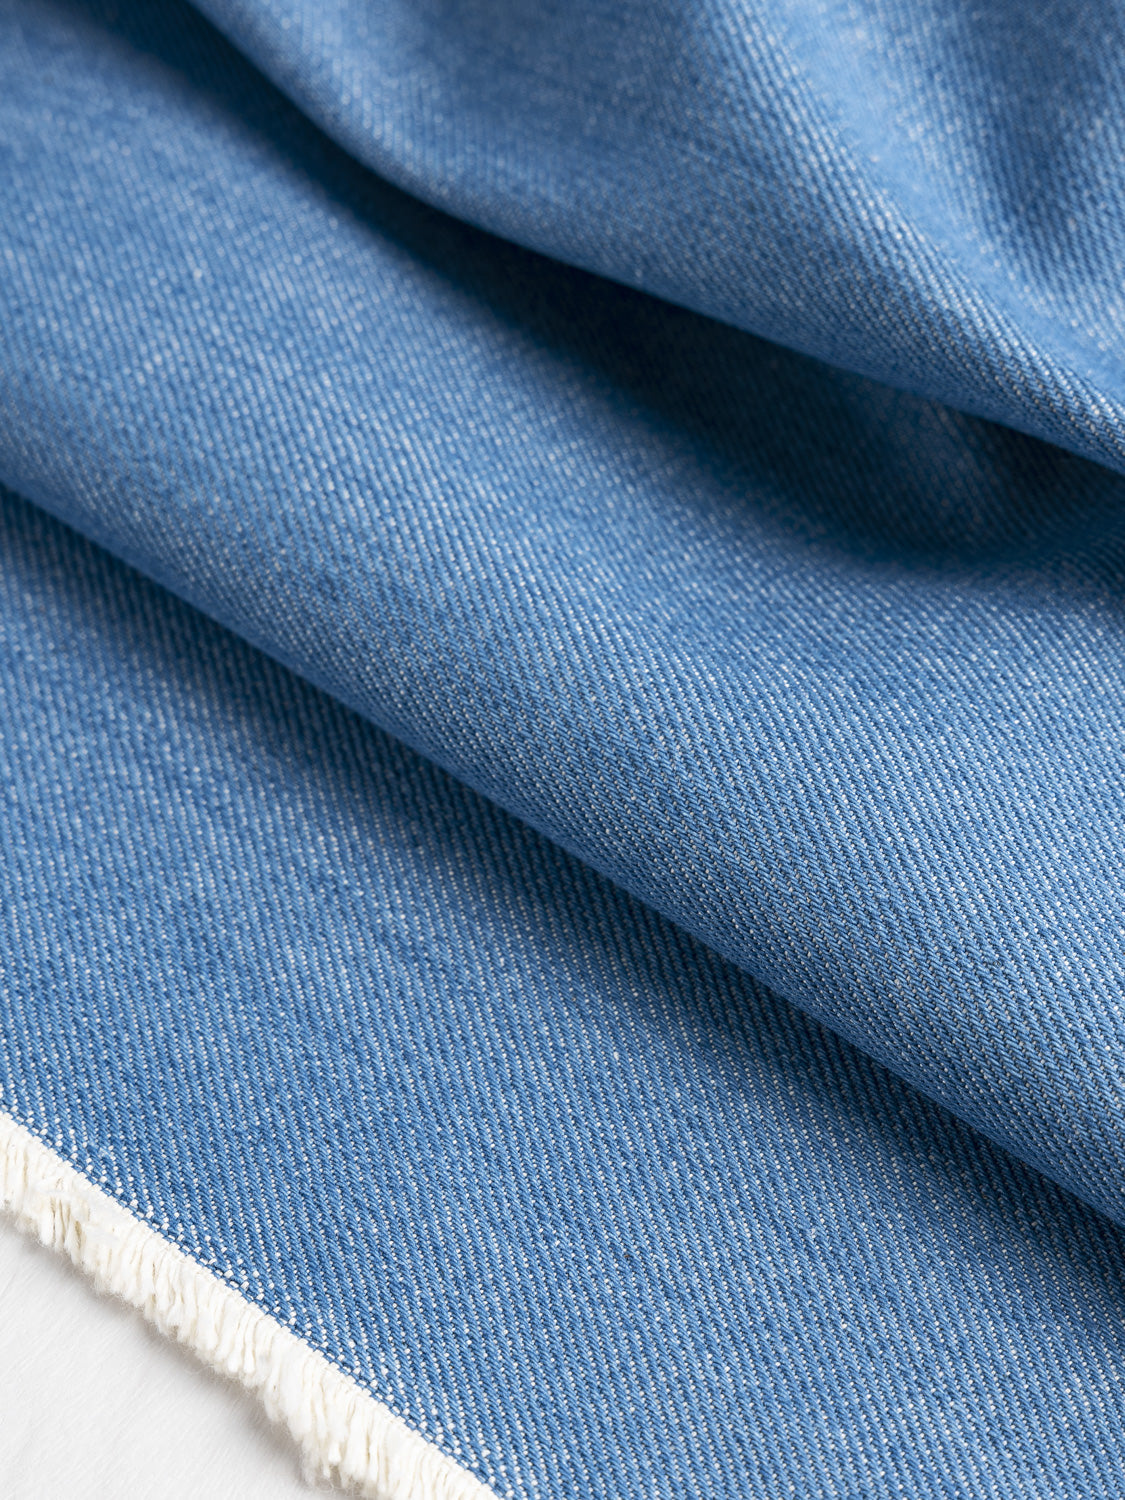 Cotton/ polyester blue denim stretch fabric 1 yard 18 x 42med weight